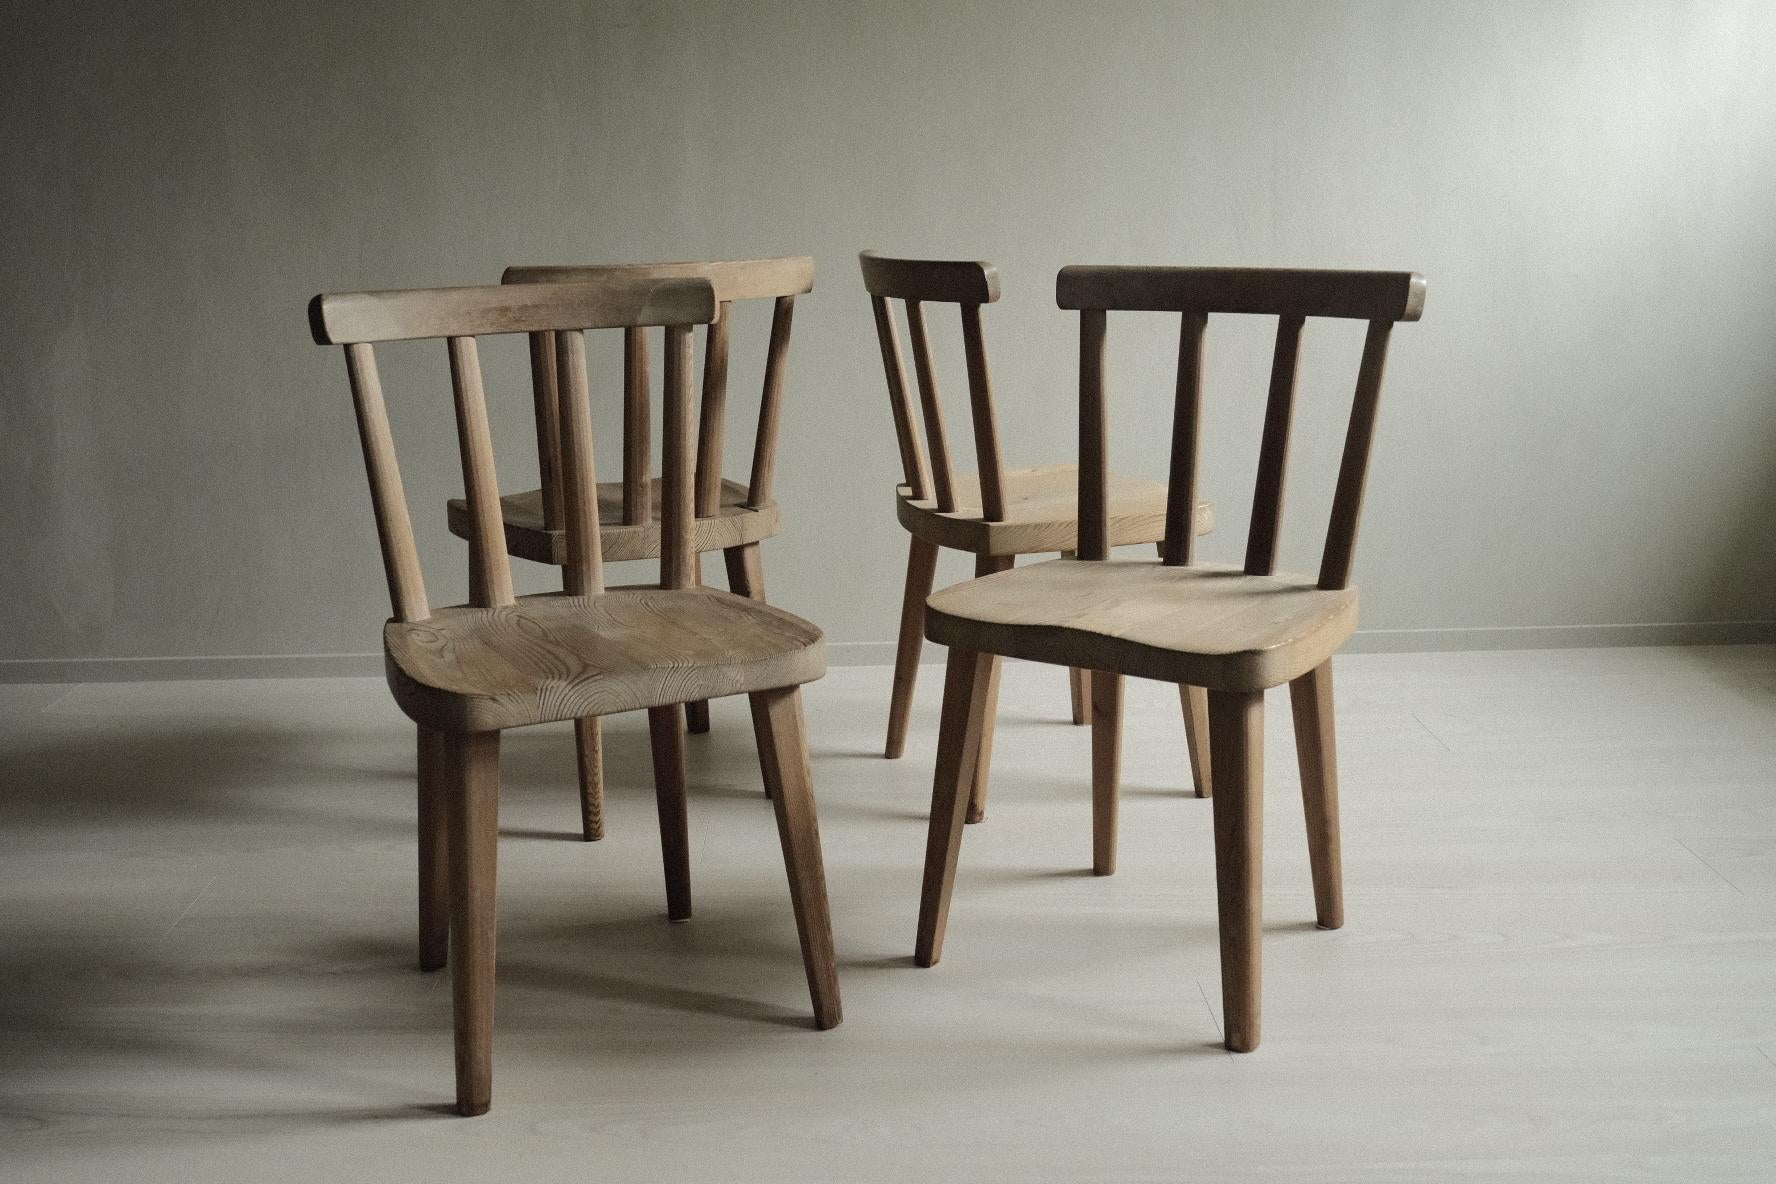 20th Century Set of 4 Utö Dining Chairs by Axel Einar Hjorth for Nordiska Kompaniet, 1930s